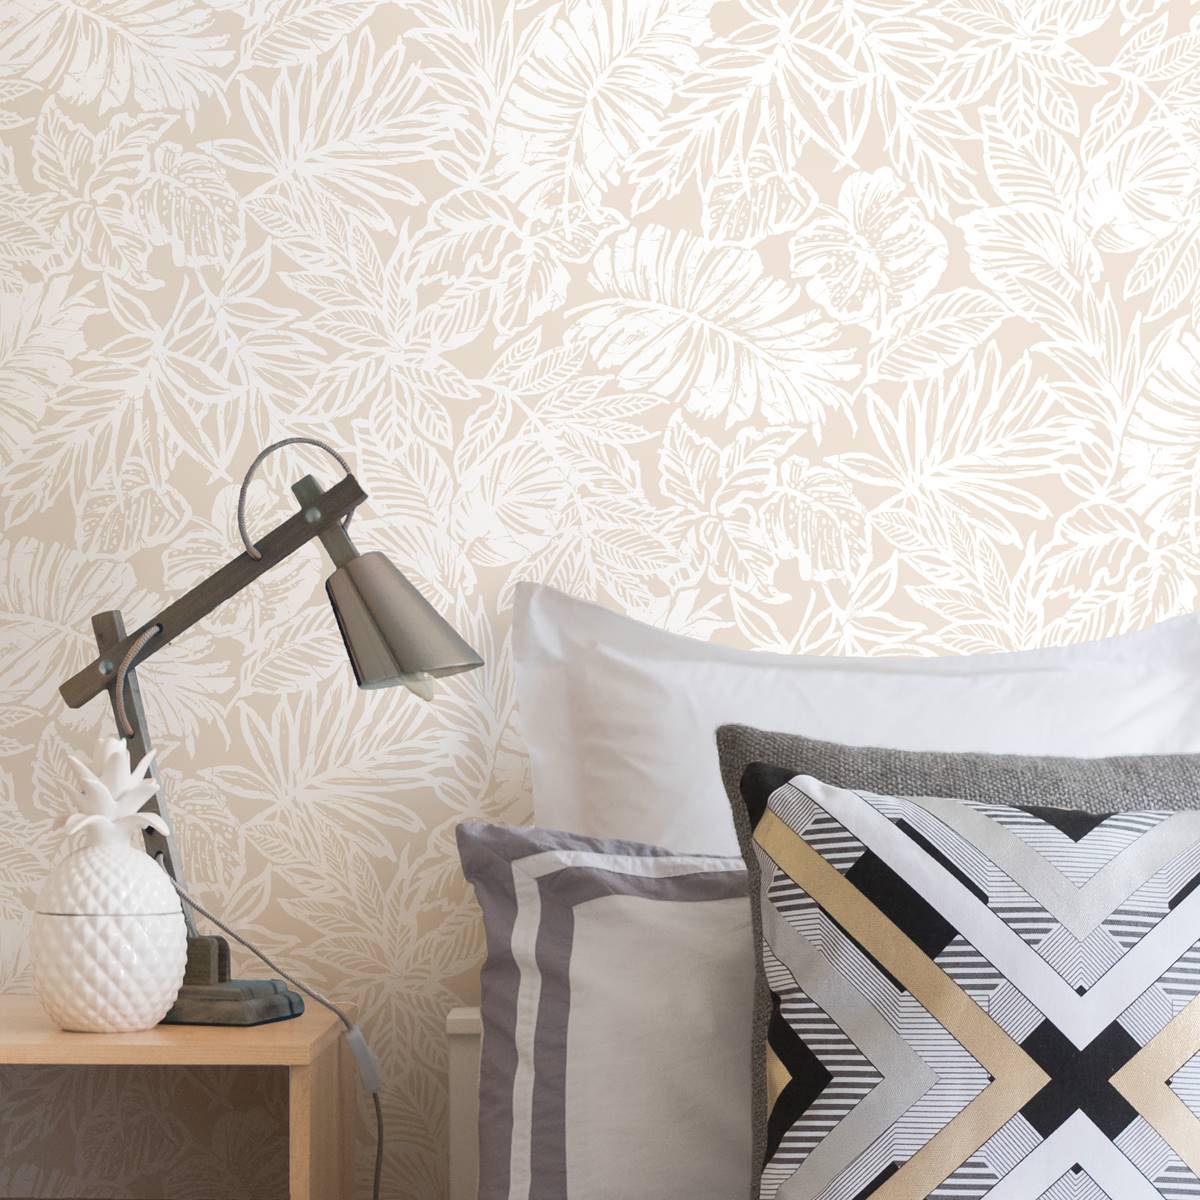 RoomMates(R) Beige Batik Tropical Leaf Peel & Stick Wallpaper